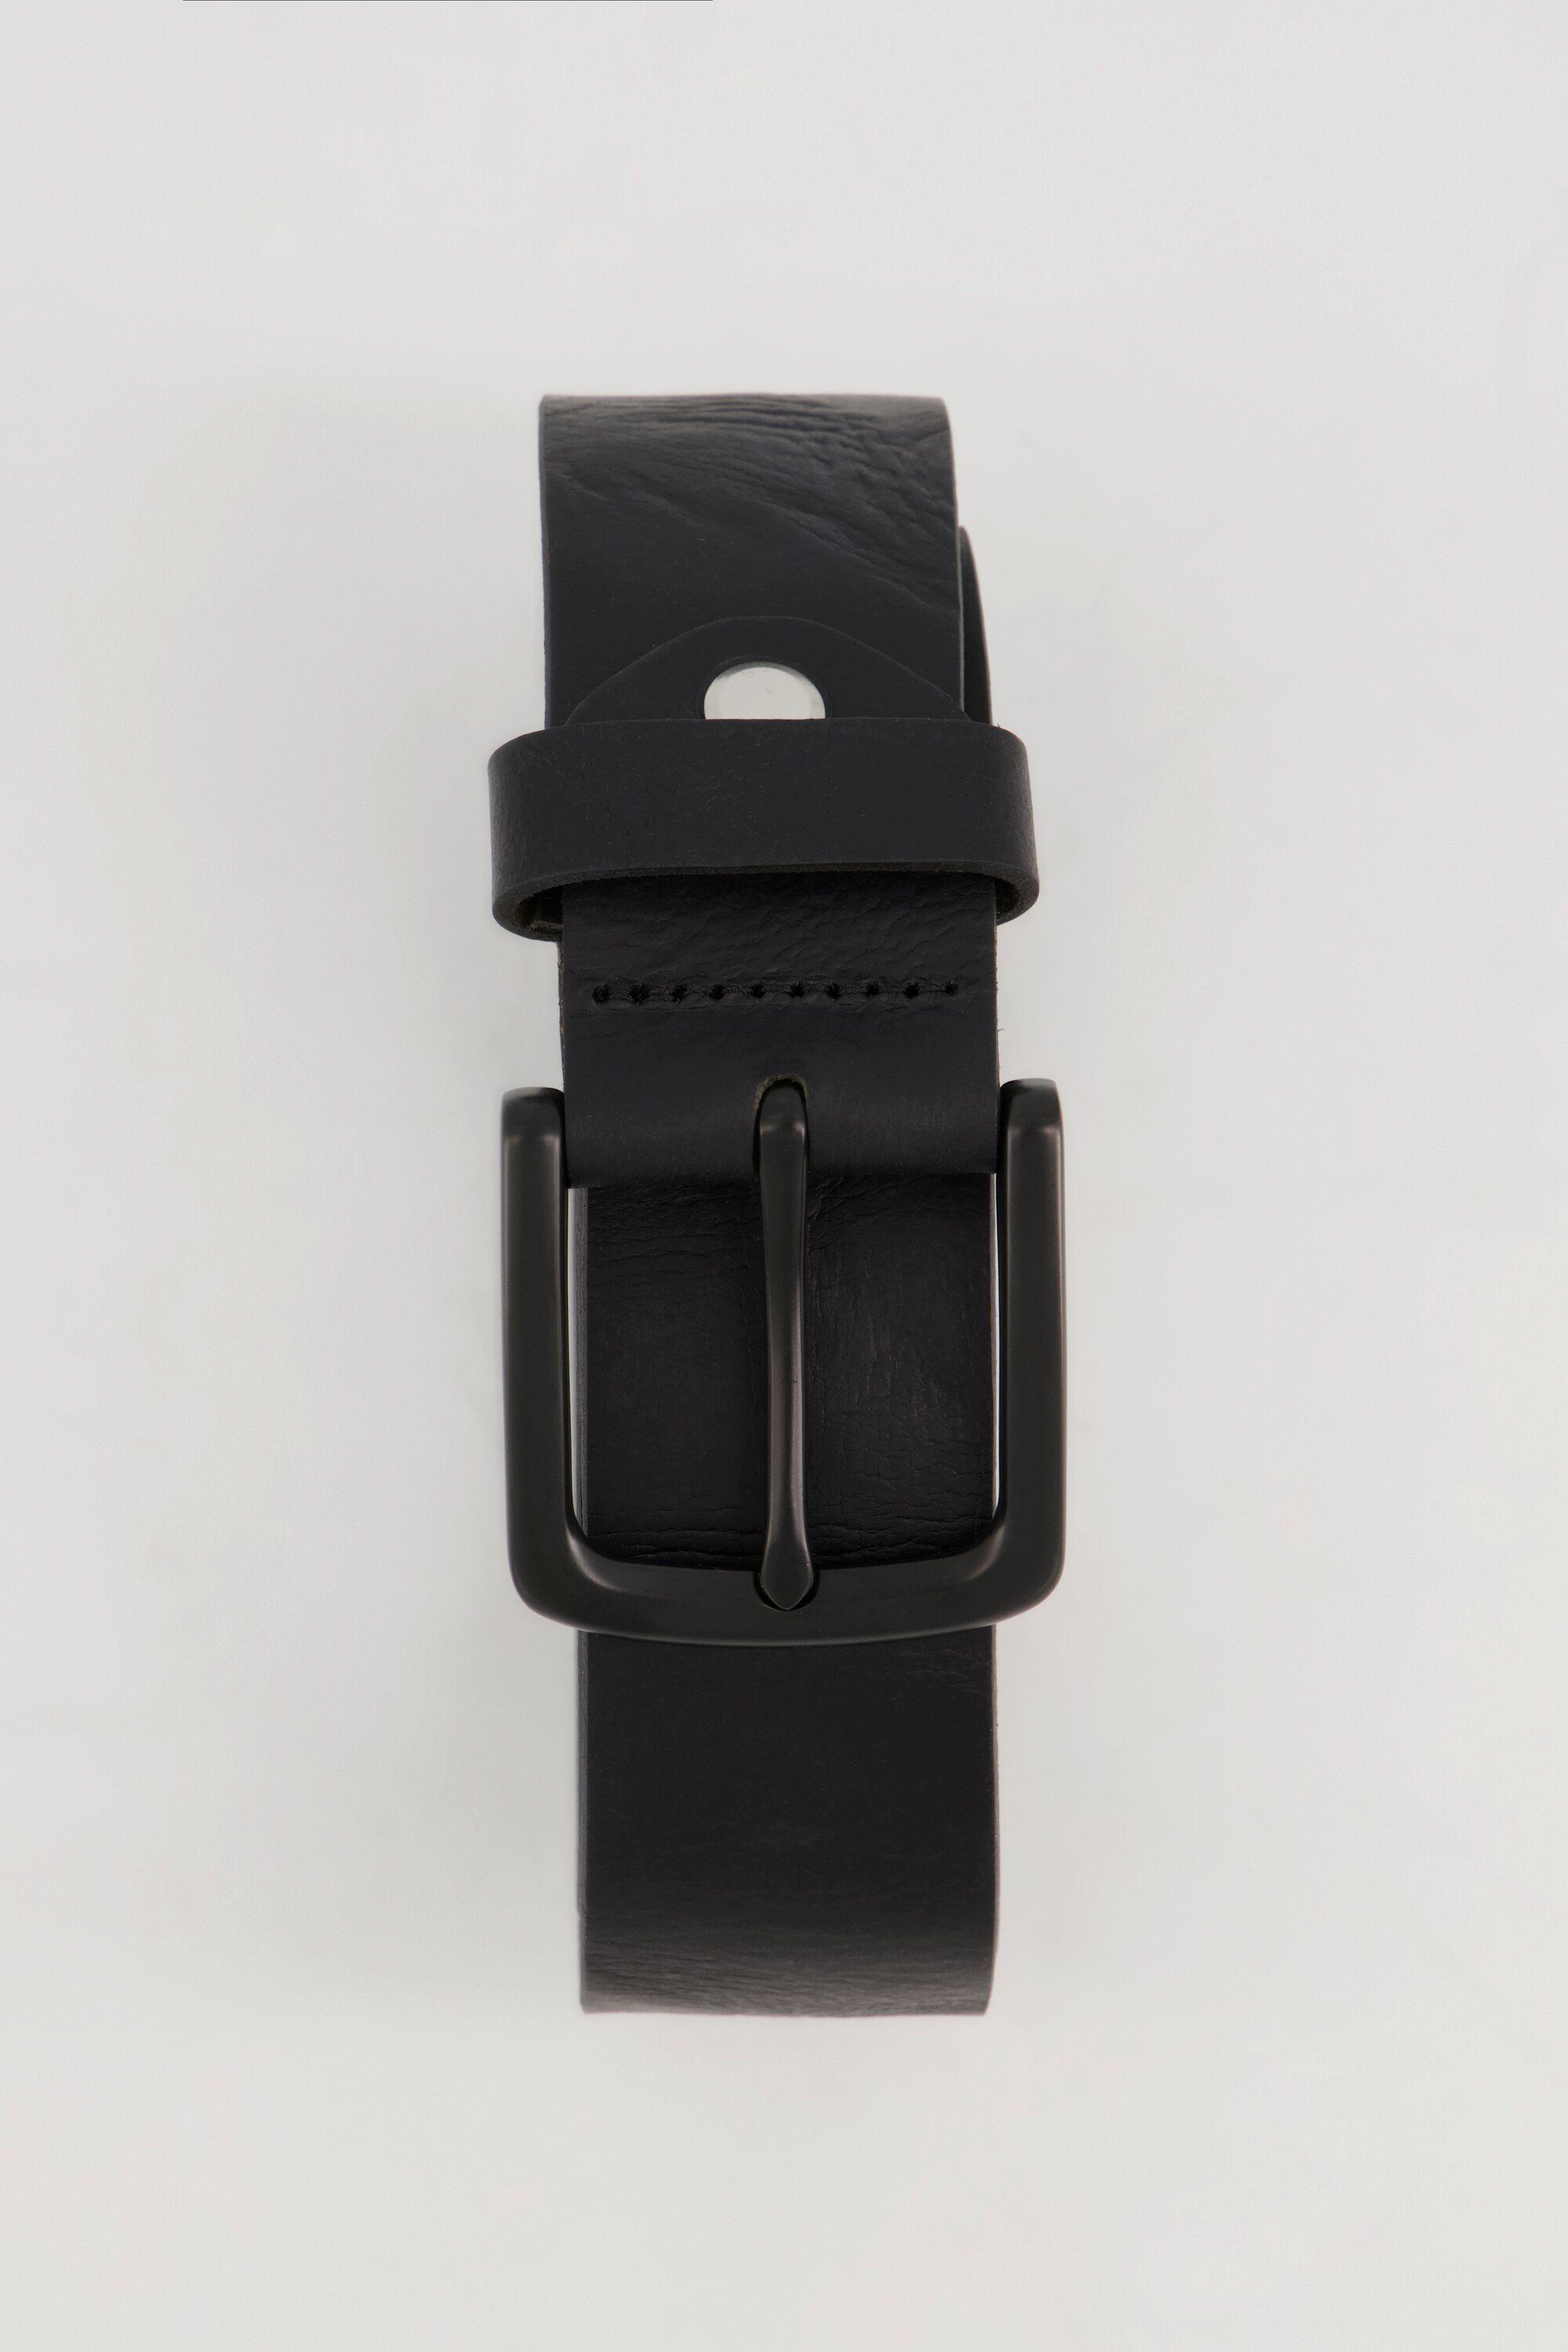 JP1880 Hüftgürtel Leder-Gürtel Metall-Schließe 4cm schwarz breit